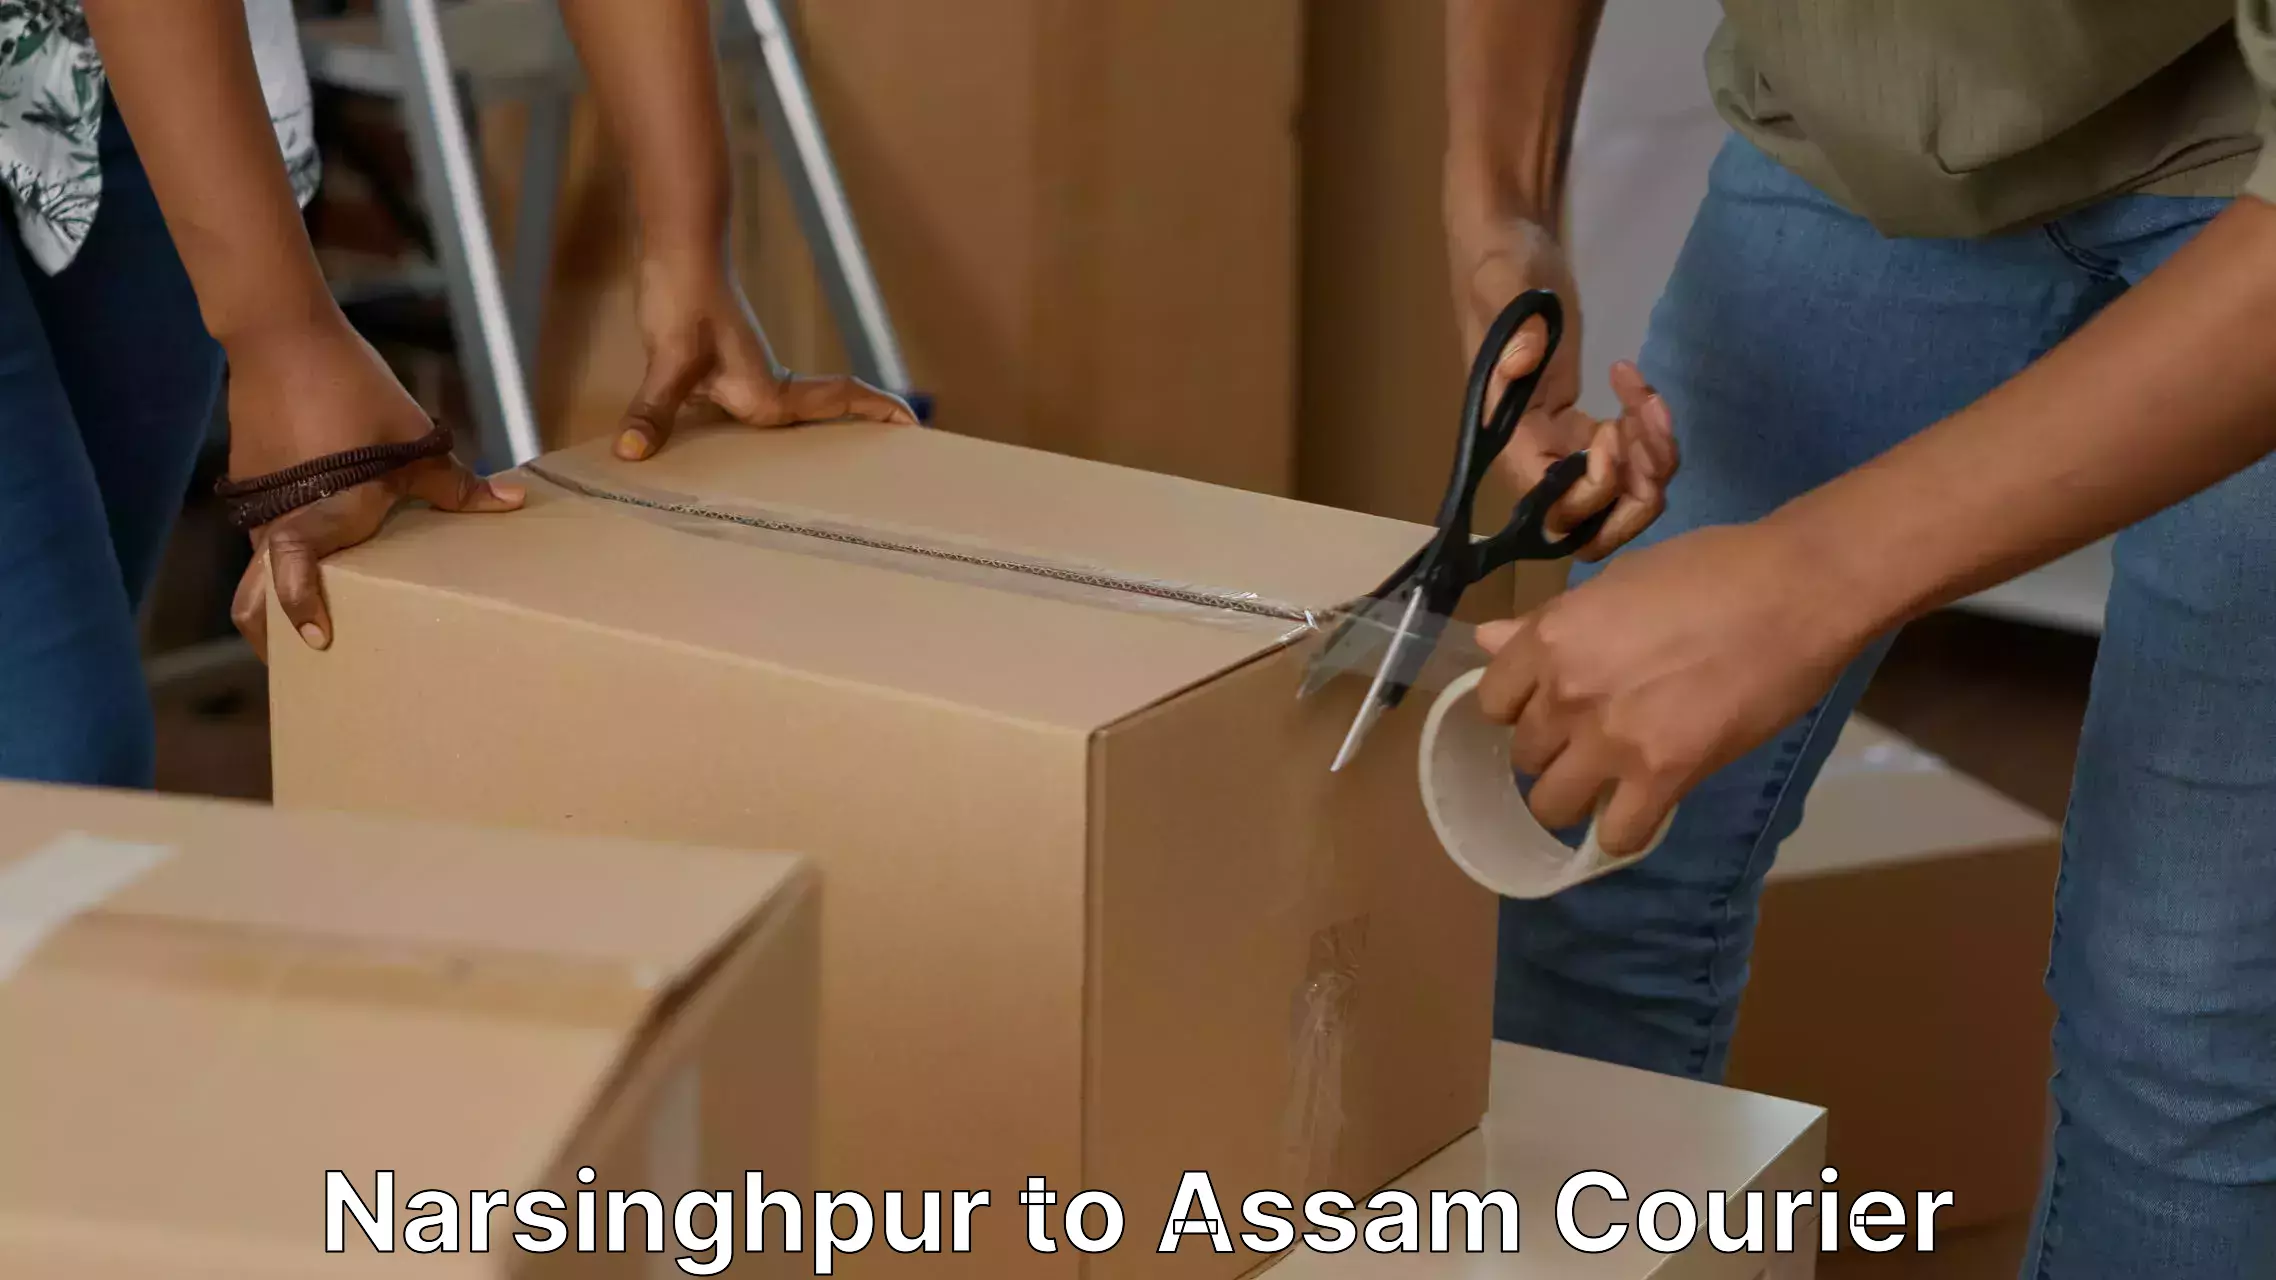 Furniture delivery service Narsinghpur to Duliajan